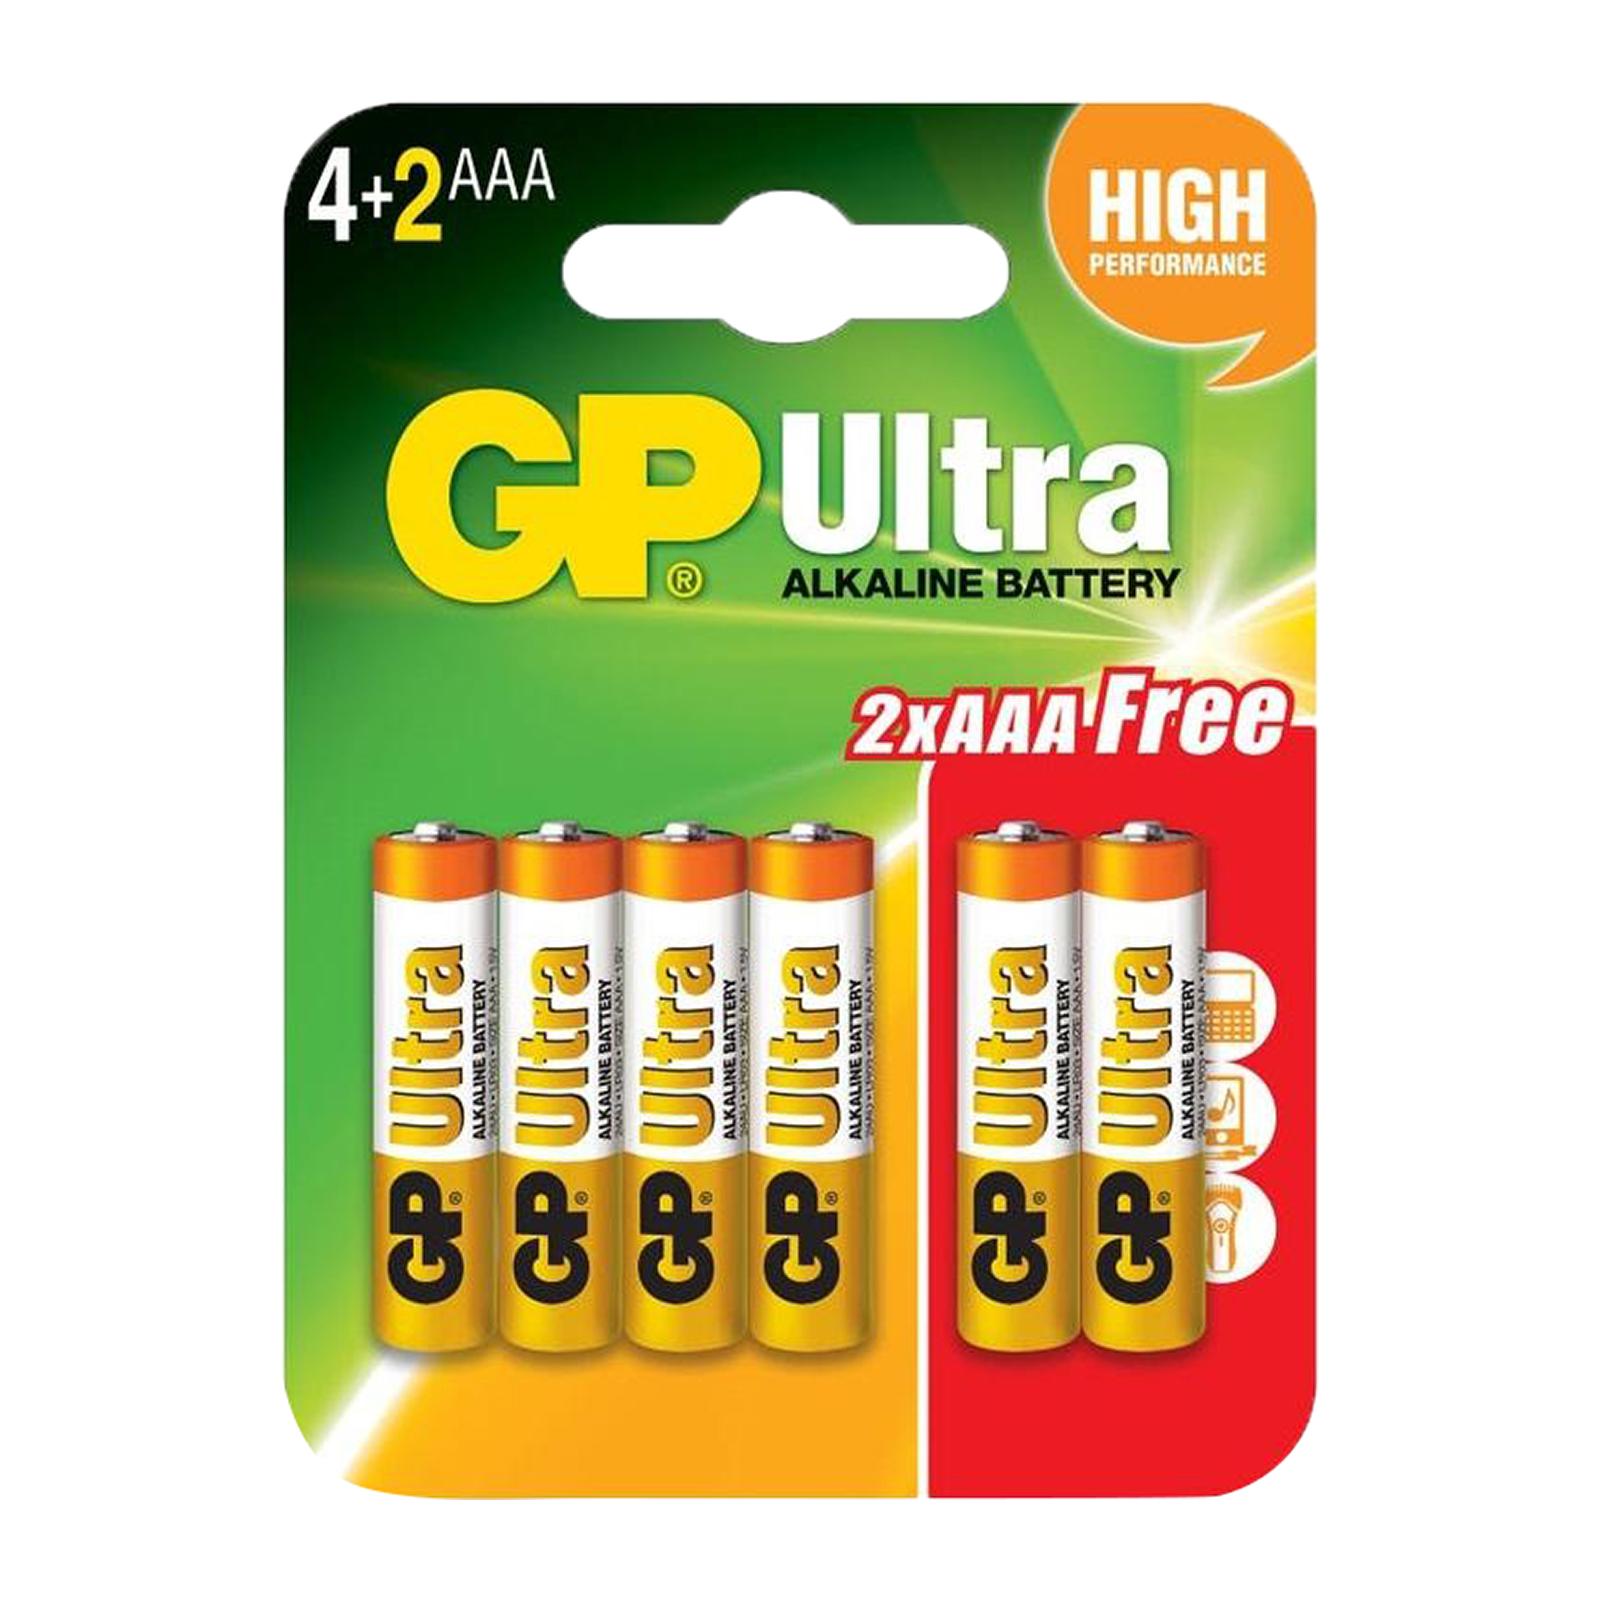 Батарейки Alkaline AAA. Батарейка GP Ultra 24au4/2-2cr6 AAA 1,5 В, 6шт/упак. Power Ultra Alkaline. Подойдут ли аккумуляторы GP Ultra к радиоприемнику Смик кк9. Gp alkaline battery